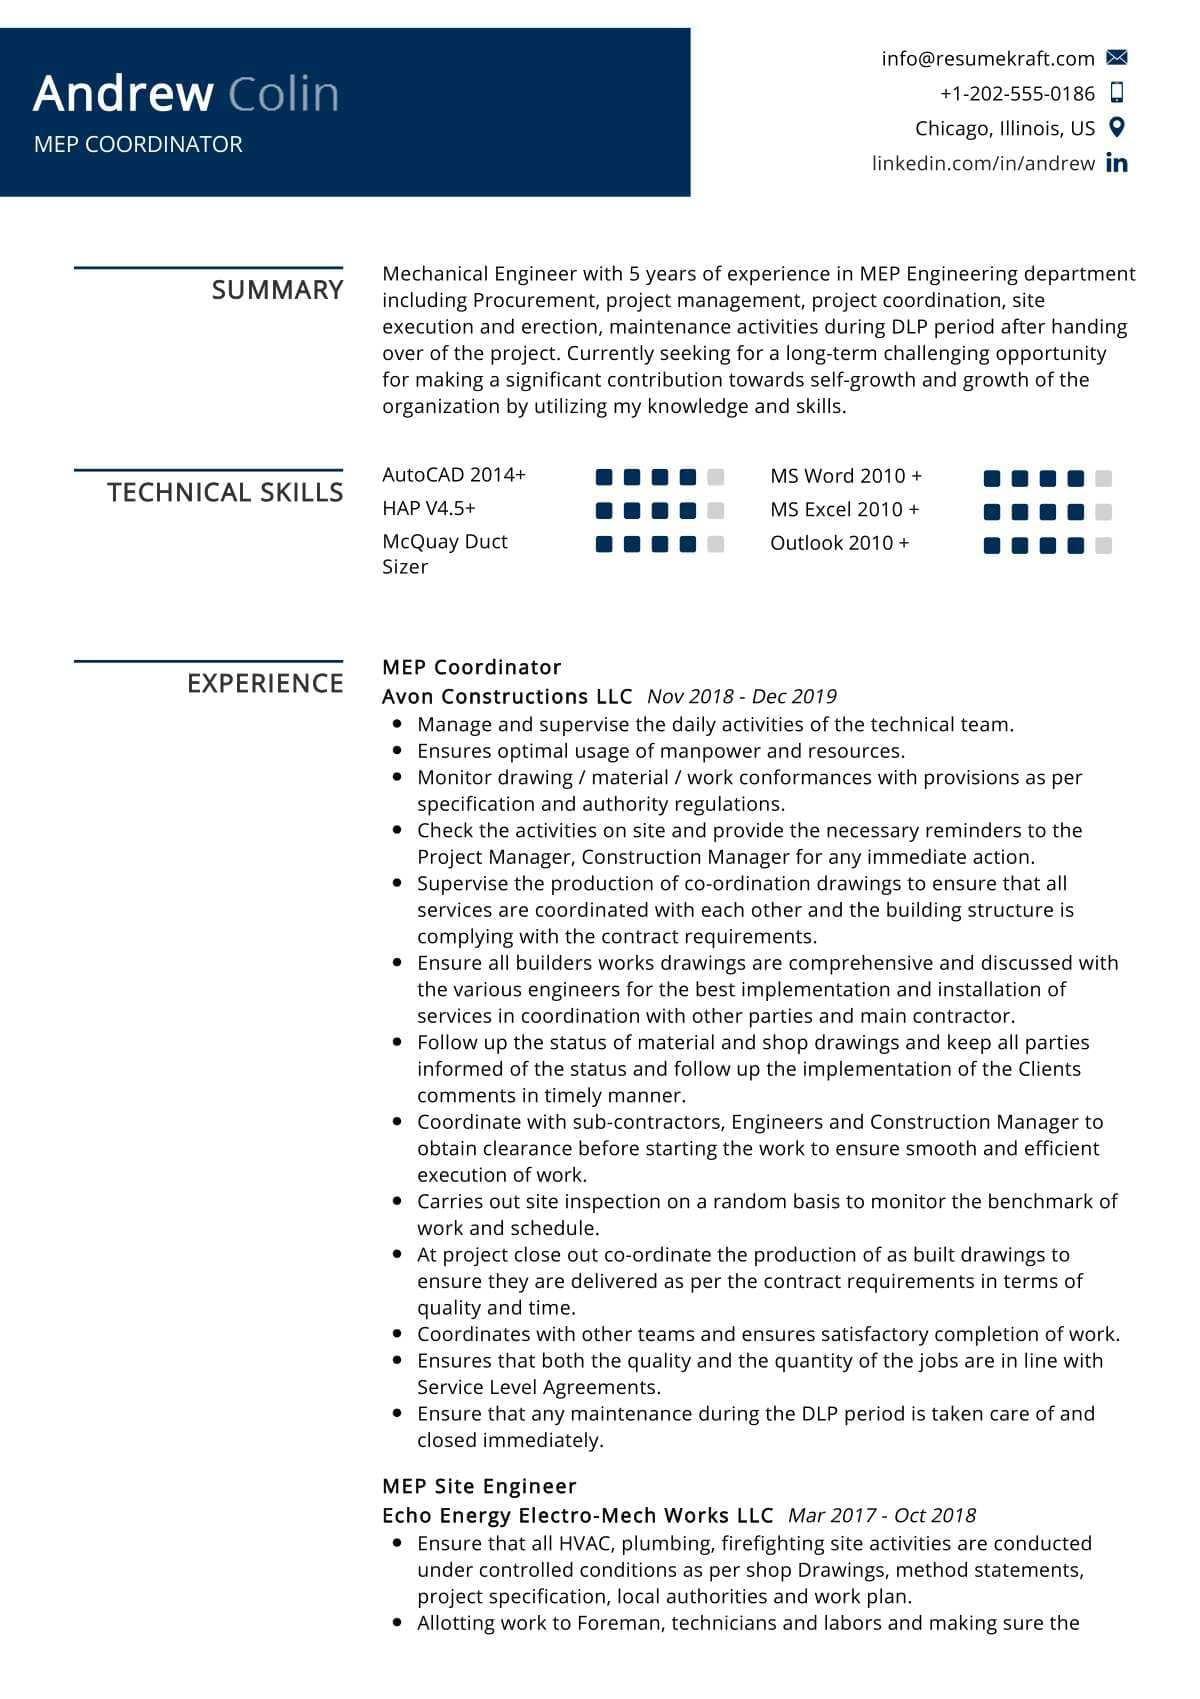 Sample Resume for Paint Shop Engineer Mep Coordinator Resume Sample 2021 Writing Tips – Resumekraft